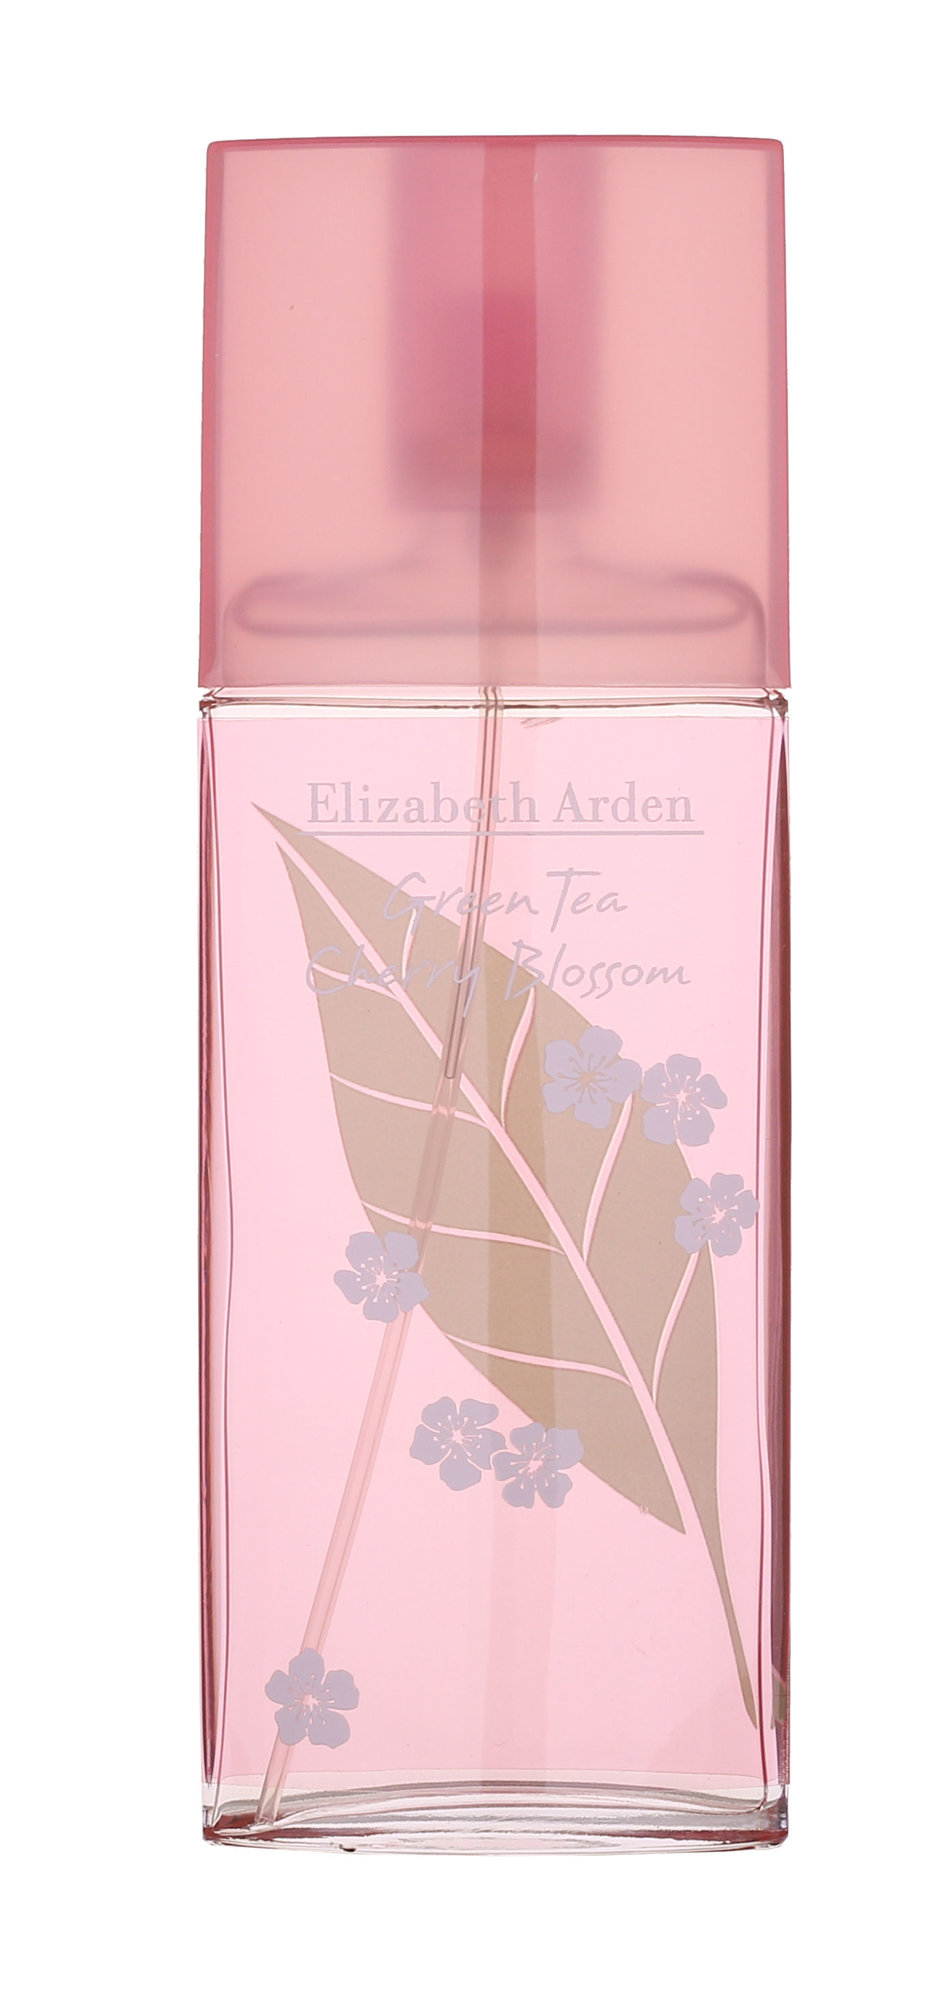 Elizabeth Arden Green Tea Cherry Blossom